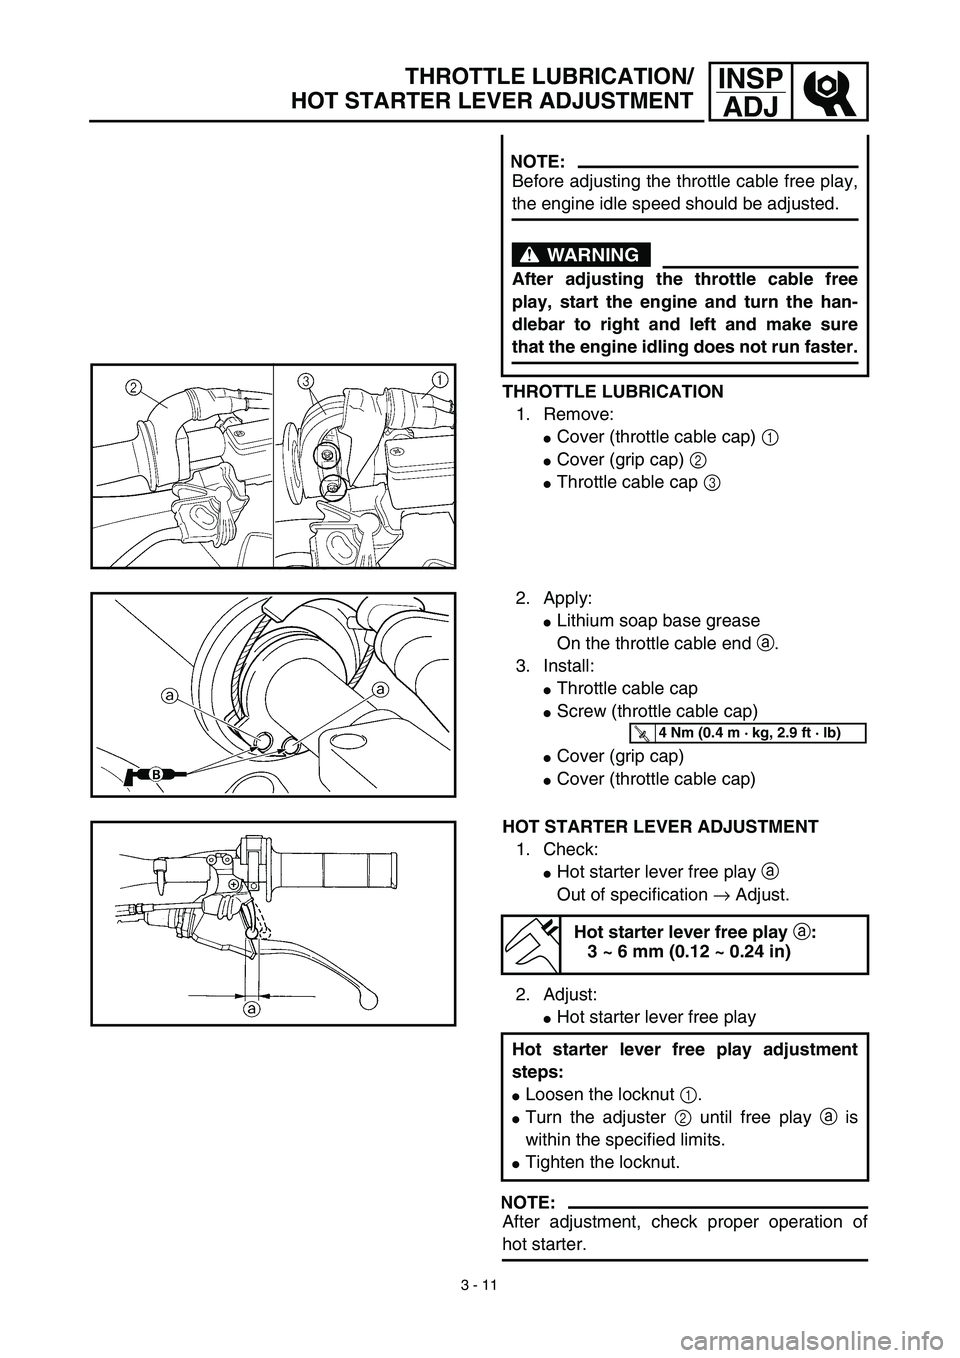 YAMAHA WR 450F 2003  Owners Manual 3 - 11
INSP
ADJTHROTTLE LUBRICATION/
HOT STARTER LEVER ADJUSTMENT
THROTTLE LUBRICATION
1. Remove:
Cover (throttle cable cap) 1
Cover (grip cap) 2
Throttle cable cap 3
NOTE:
Before adjusting the thr